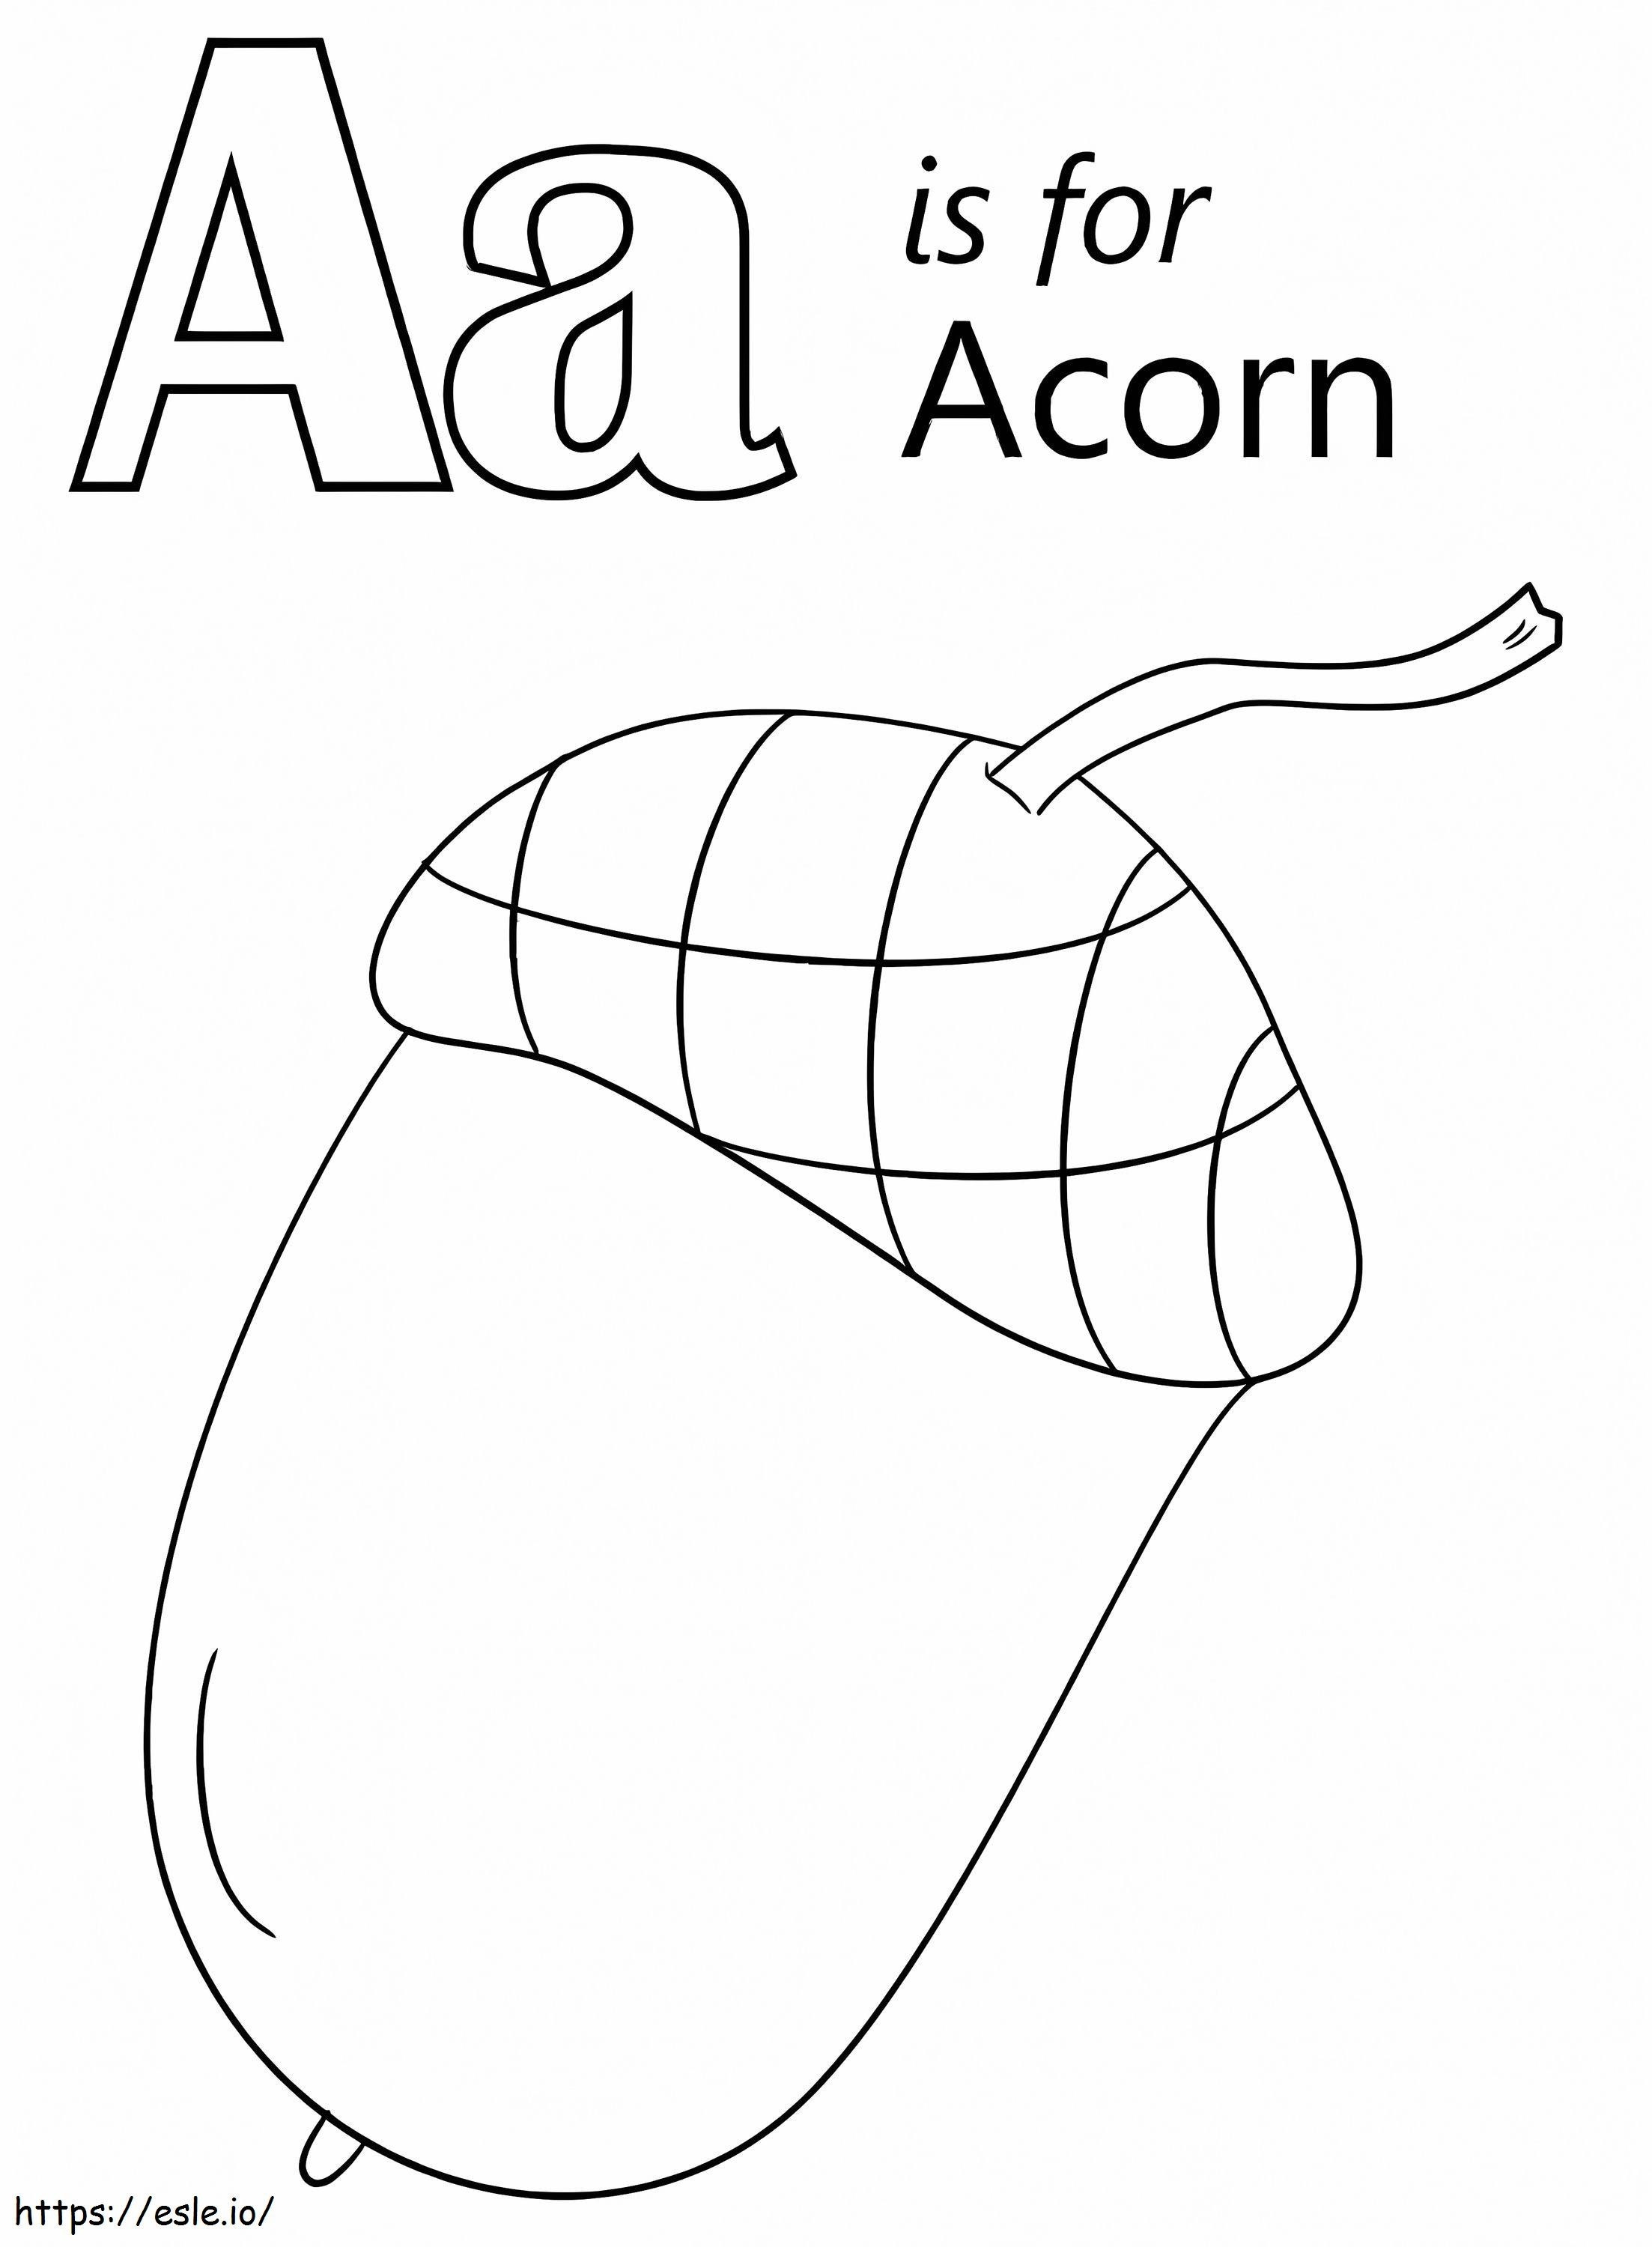 Acorn Letter A coloring page